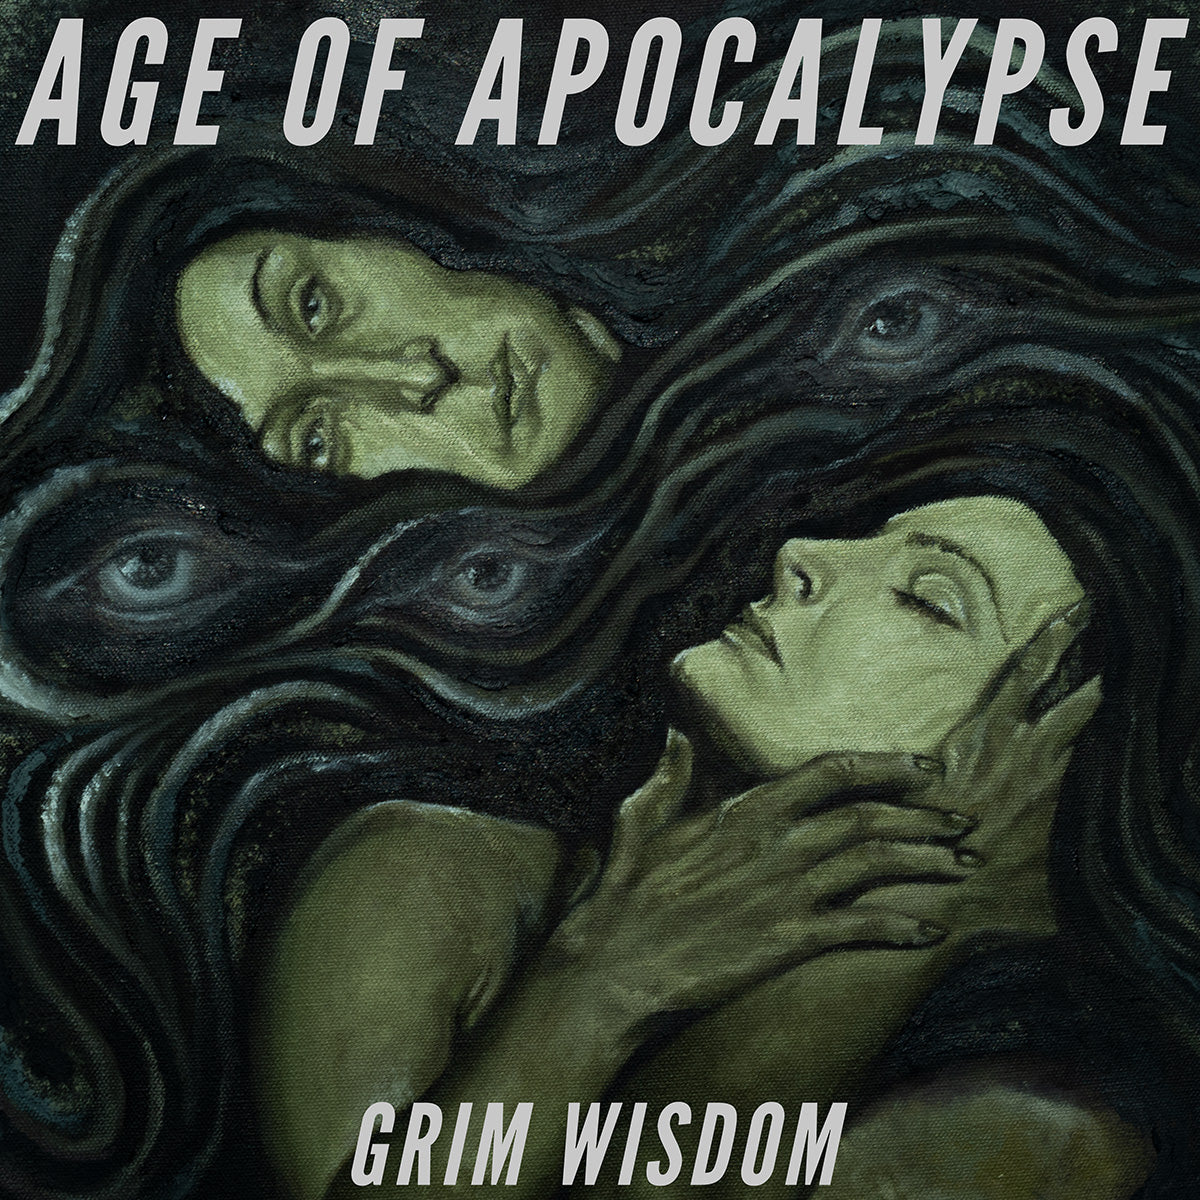 AGE OF APOCALYPSE "Grim Wisdom" CD